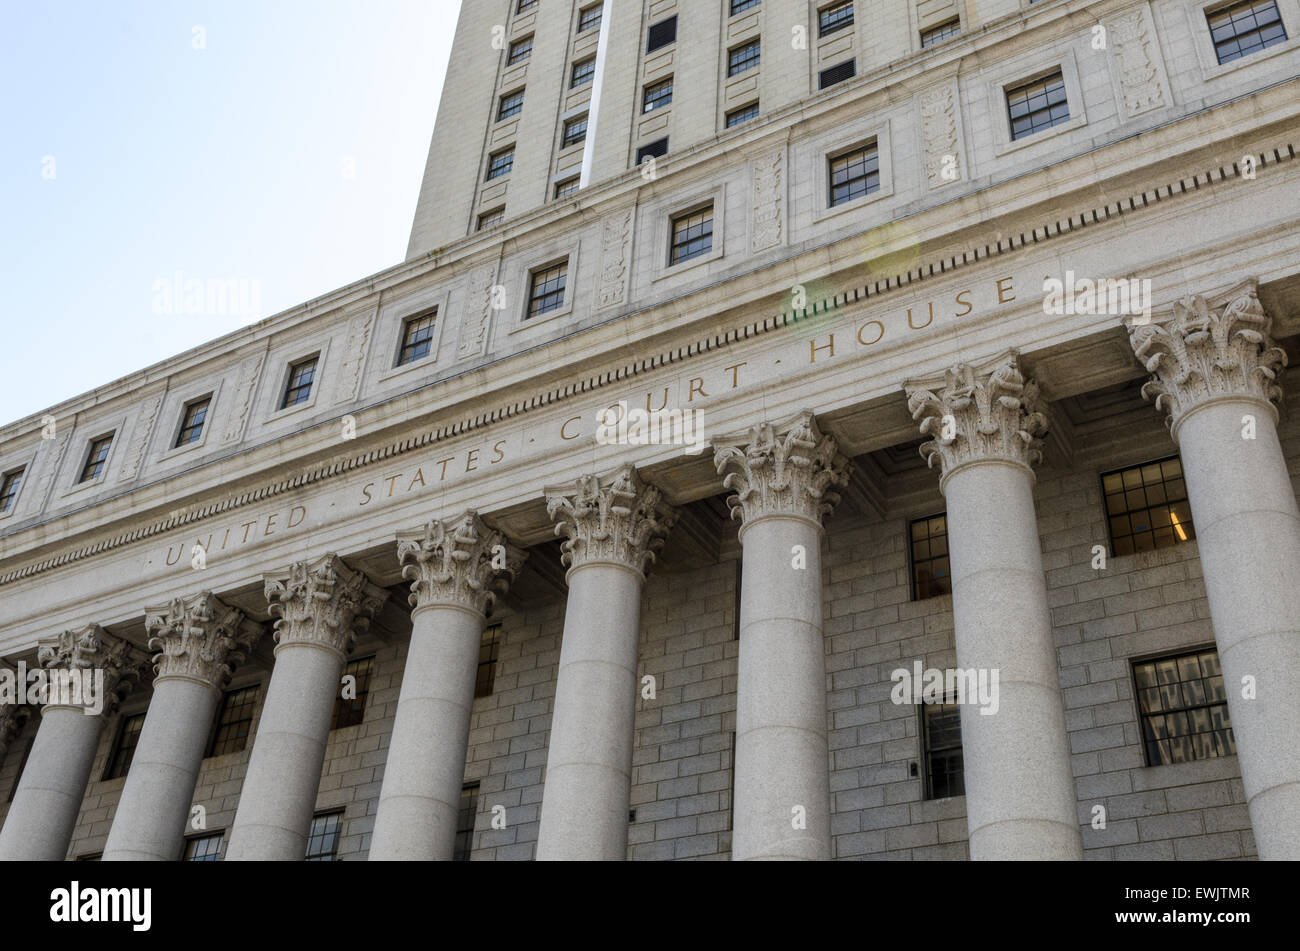 United States Court House in Lower Manhattan, New York city Stock Photo